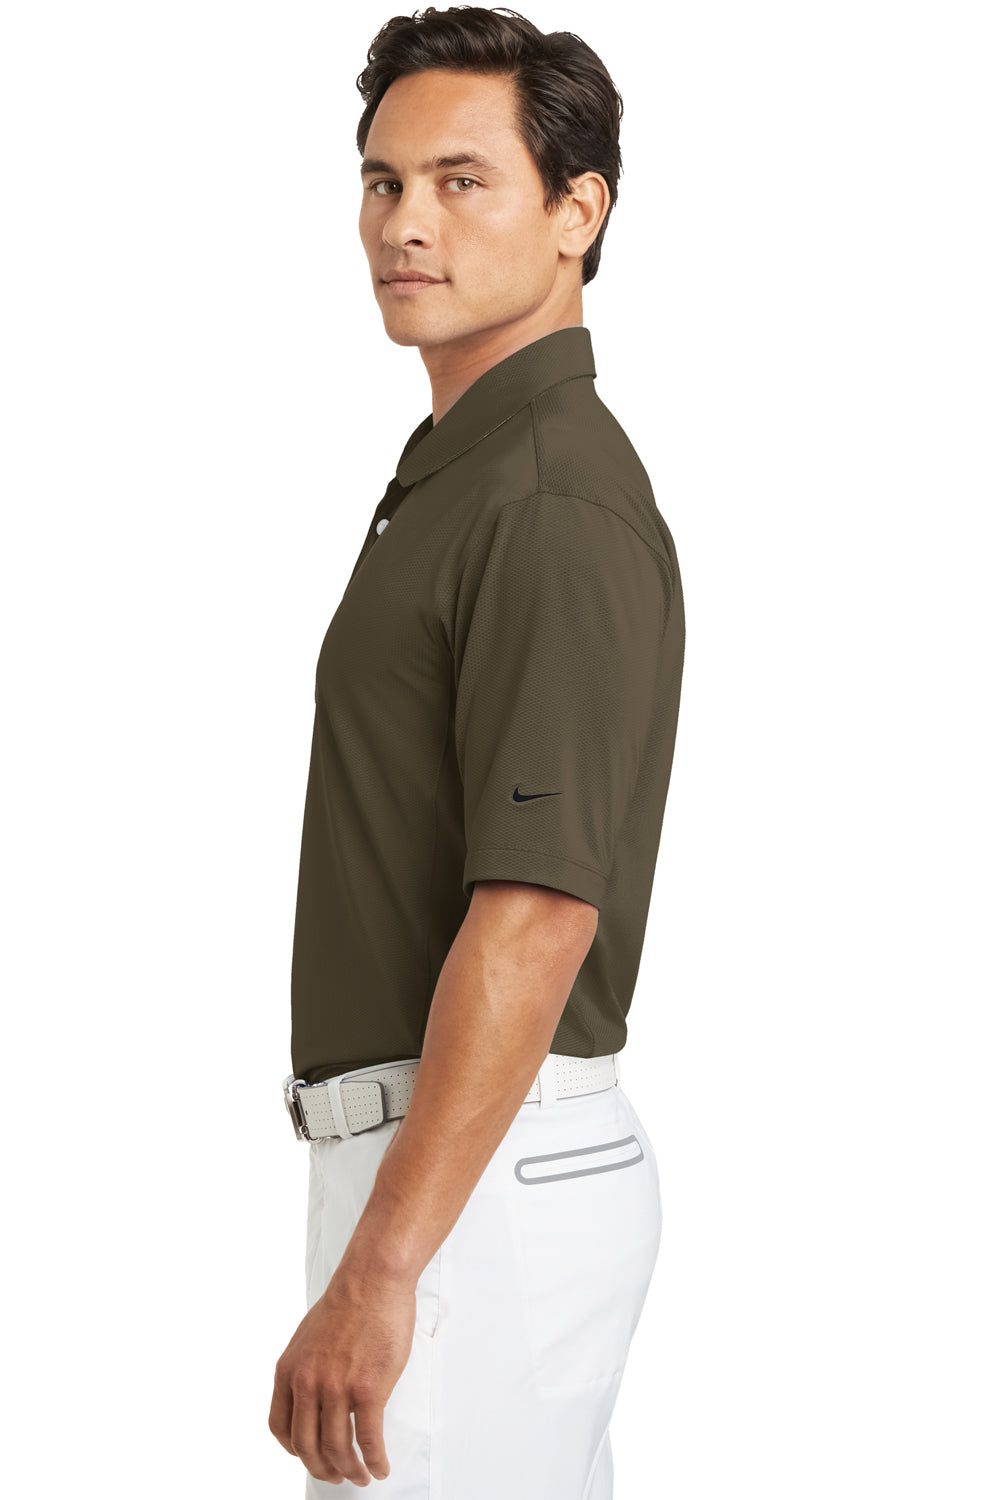 Nike 354055 Mens Sphere Dry Moisture Wicking Short Sleeve Polo Shirt Khaki Brown Side